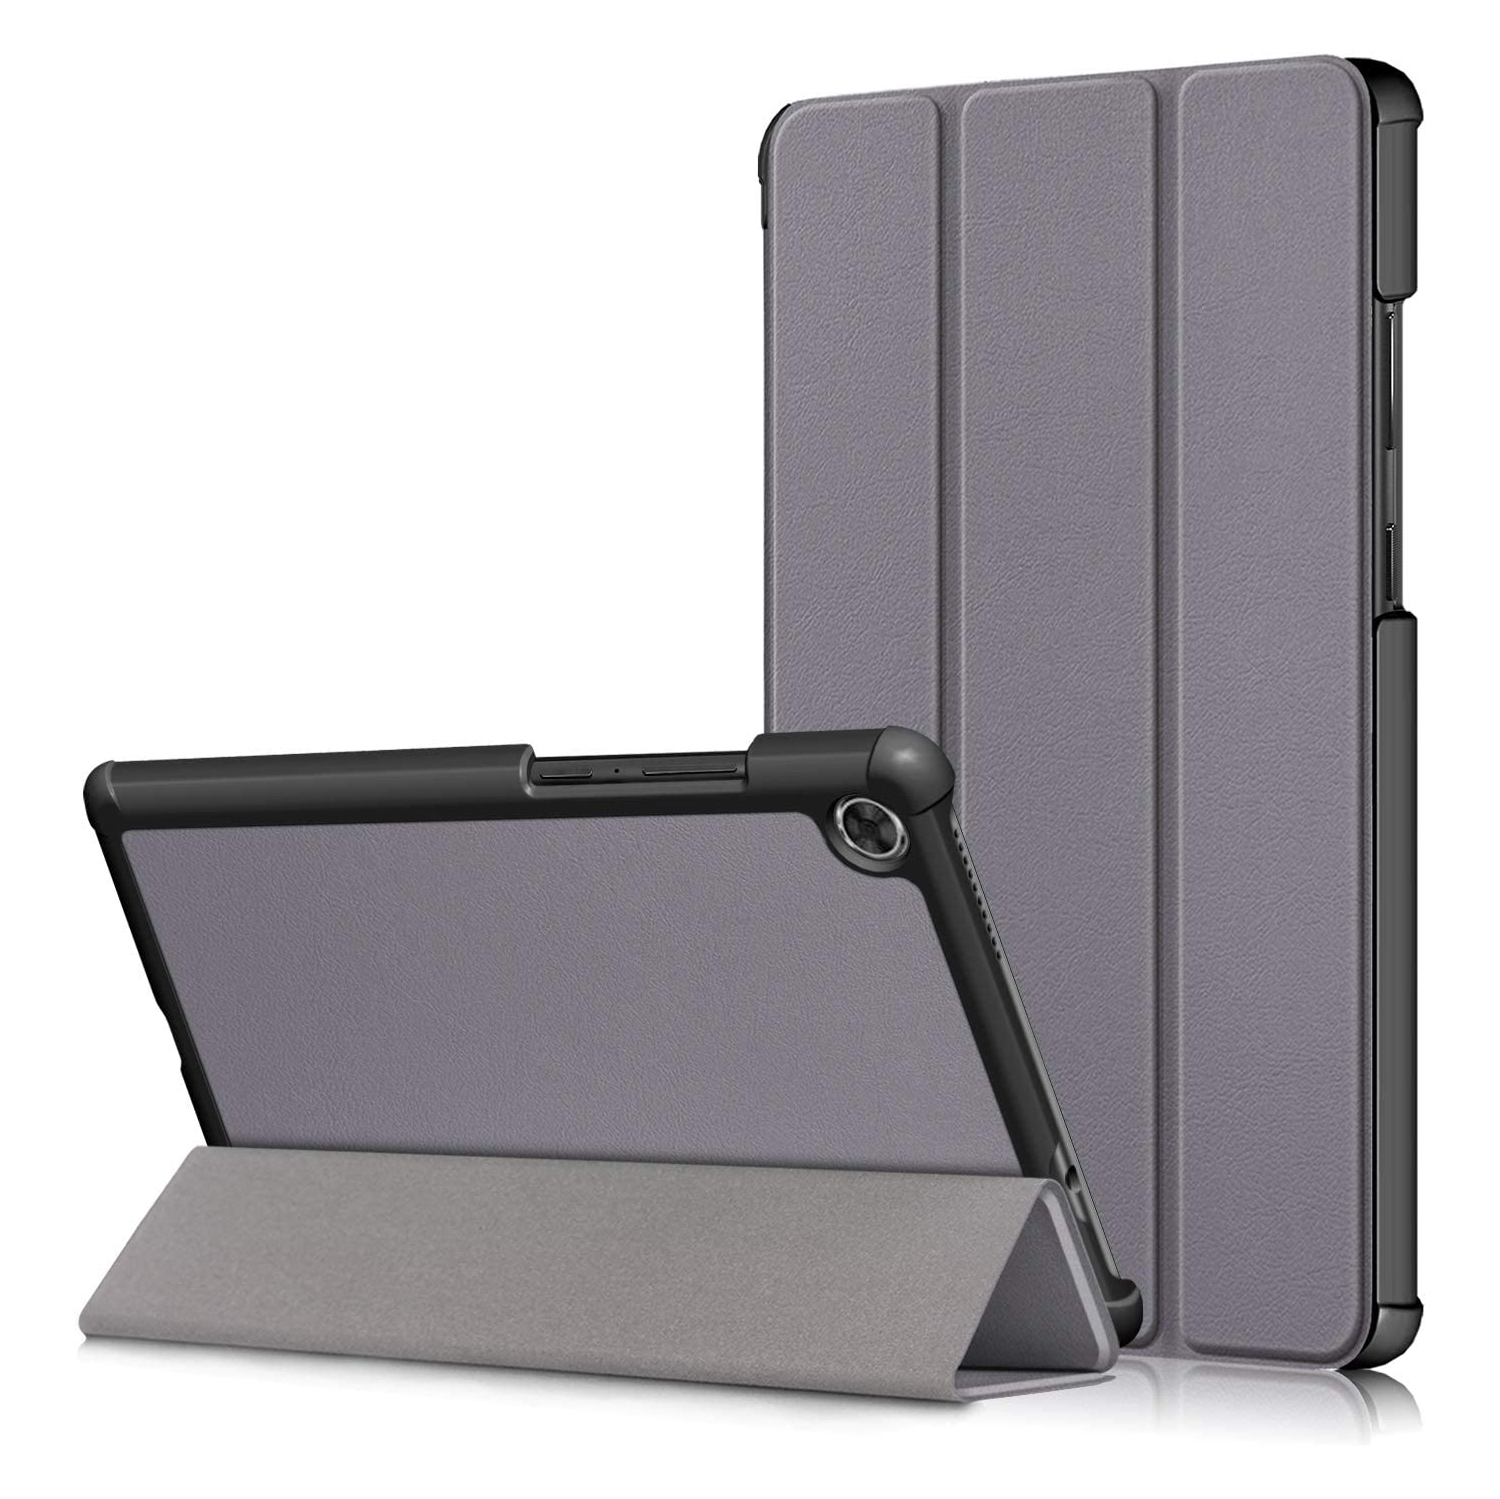 G Lenovo Tab M8 TB-8505F Case, Smart Case Trifold Stand Slim Lightweight Case Cover for Lenovo Tab M8 TB-8505F / TB-8505X Tablet Gray